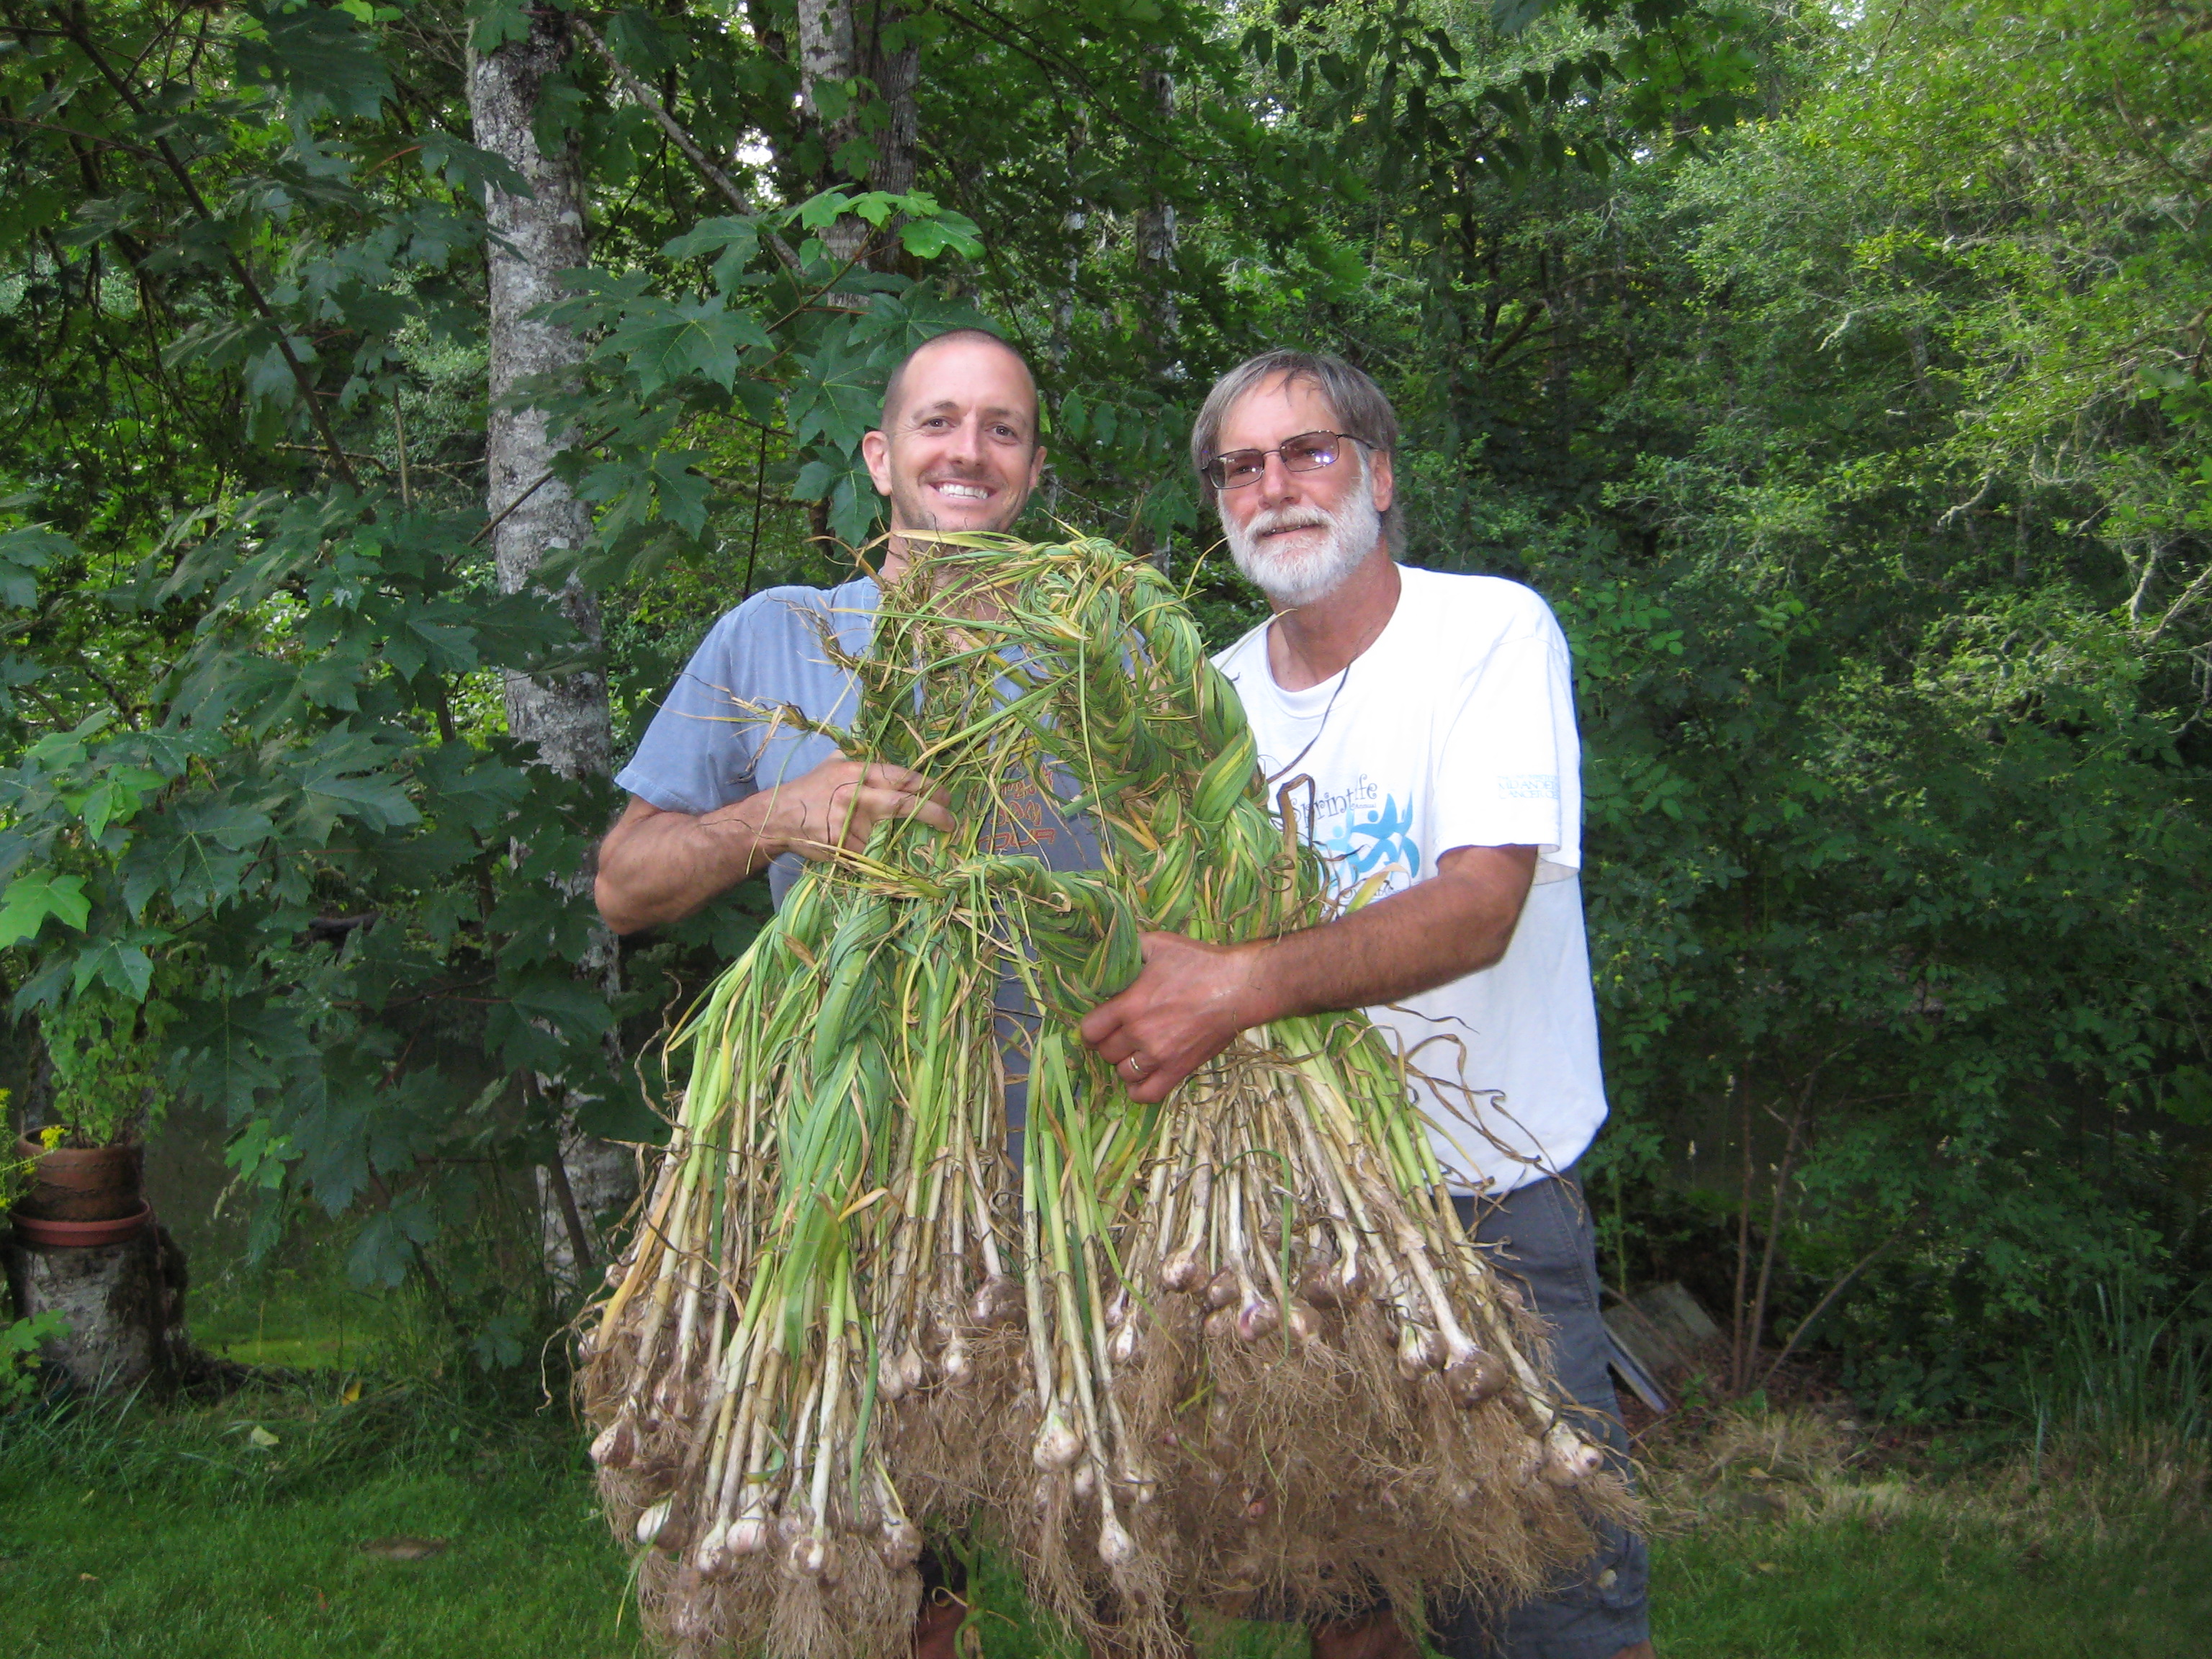 Mike Munter (left) with garlic harvest